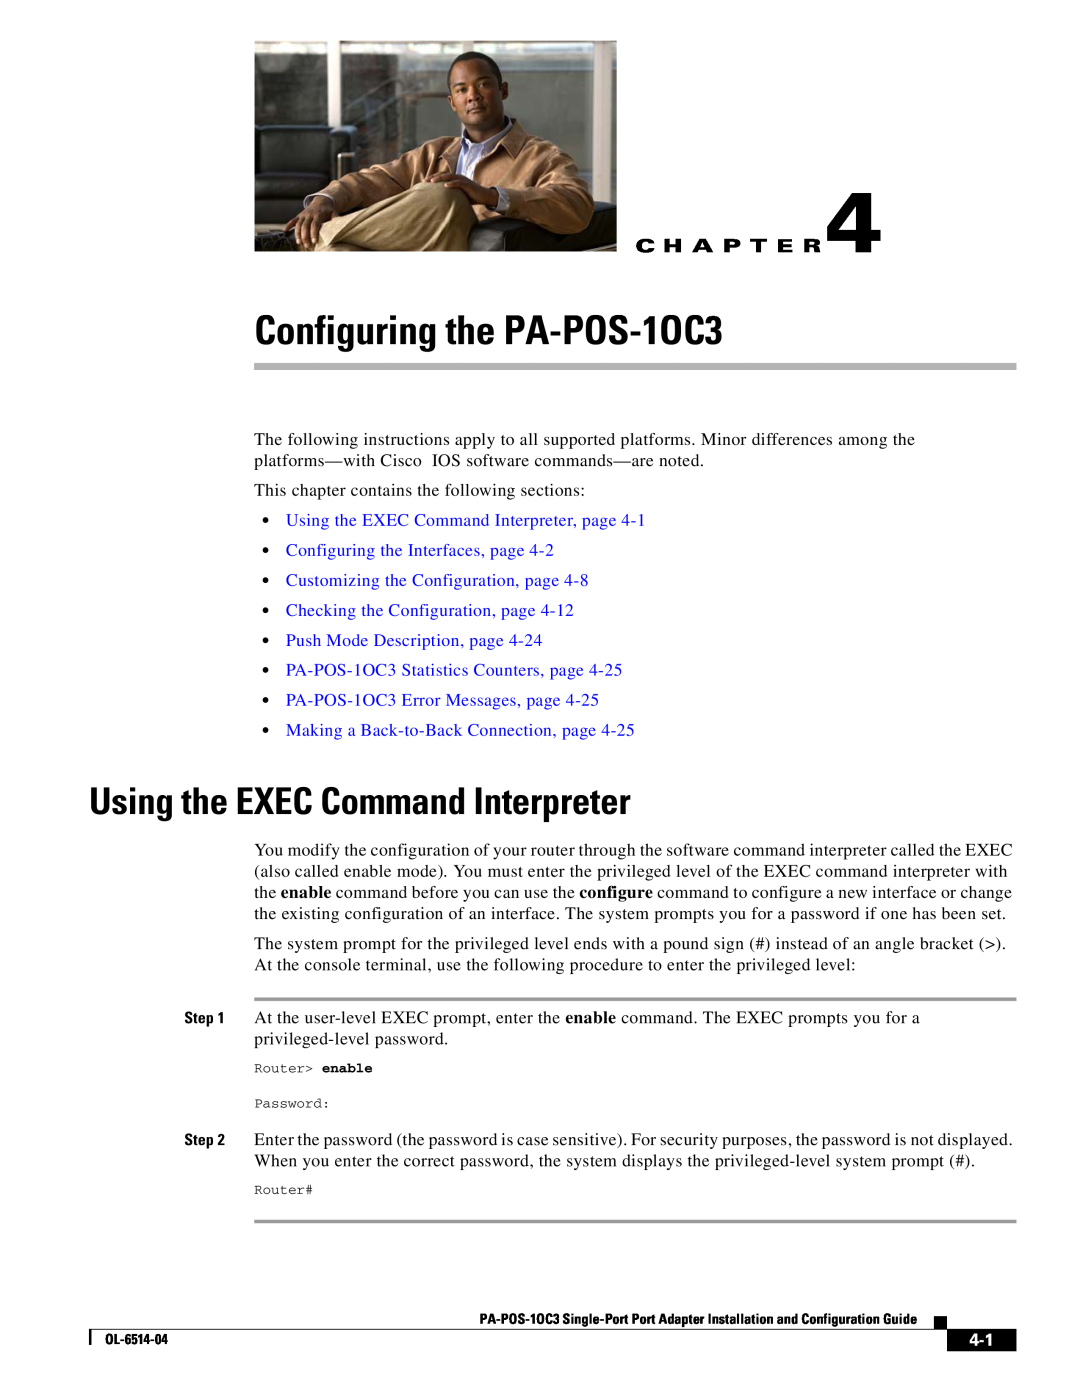 Cisco Systems PA-POS-2OC3 Configuring the PA-POS-1OC3, Using the EXEC Command Interpreter, page, C H A P T E R 